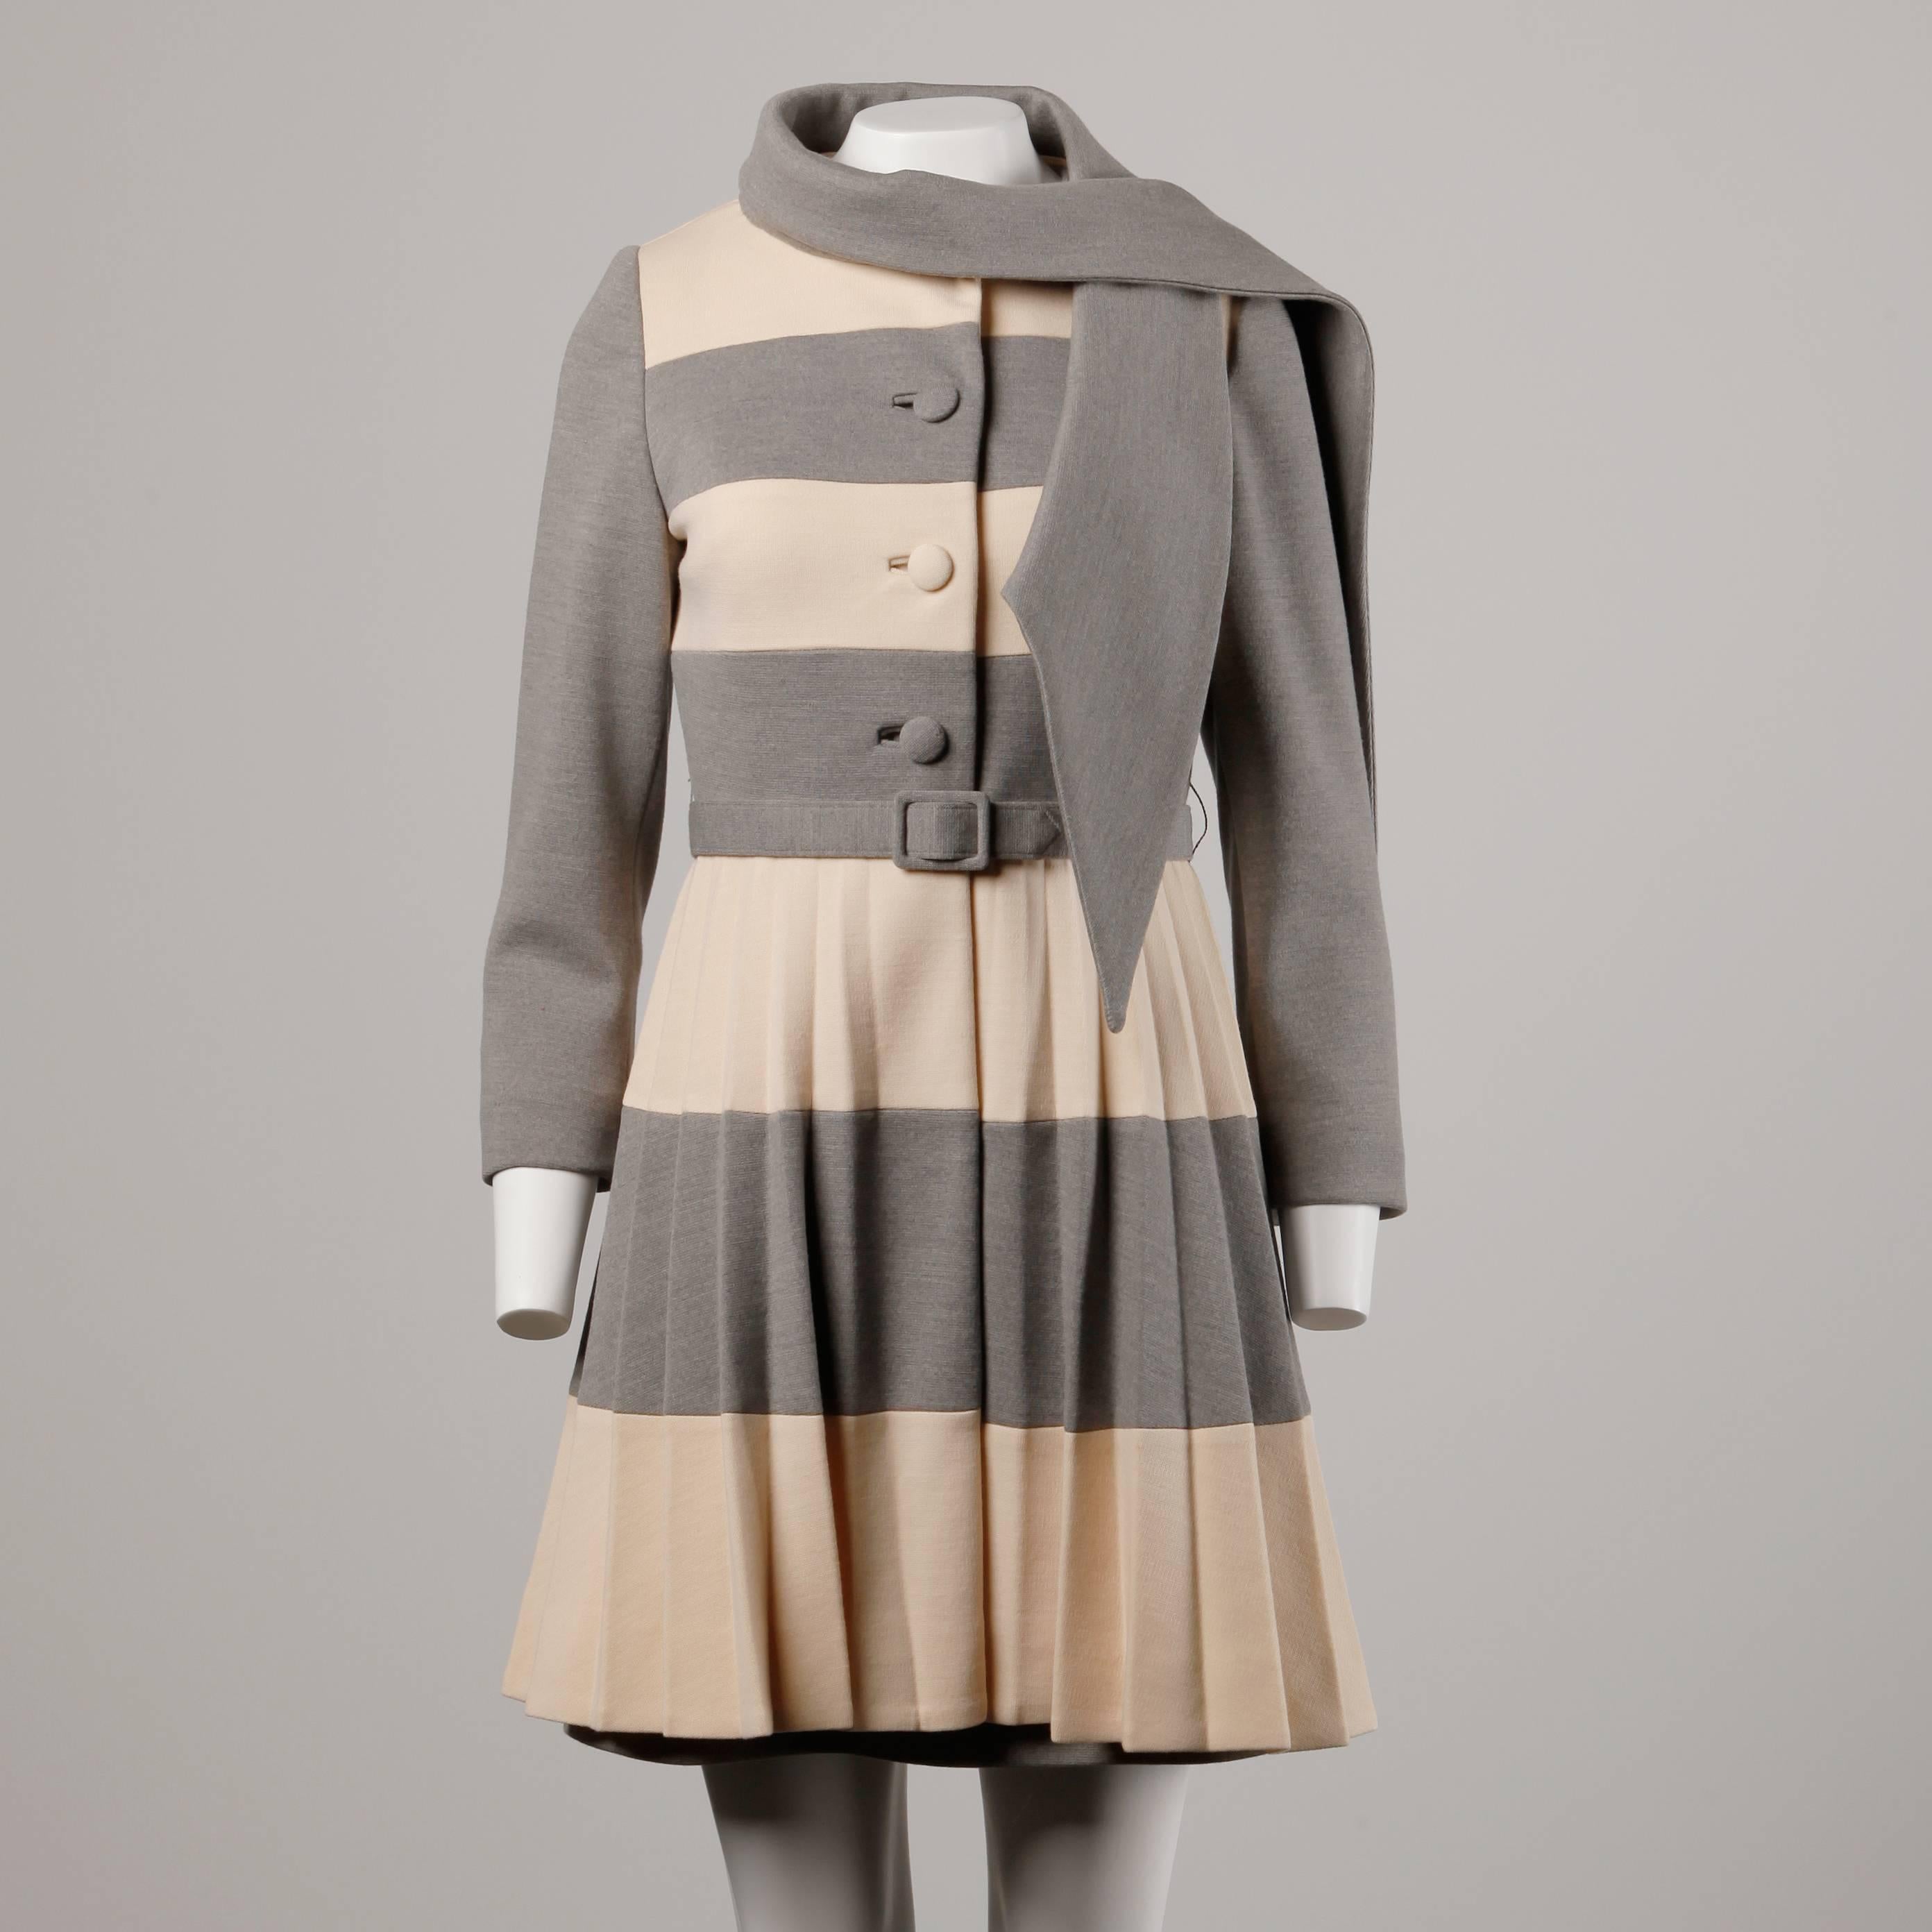 Brown Lilli Ann 1960s Vintage Mod Wool Striped Coat, Dress + Belt 3-Piece Ensemble